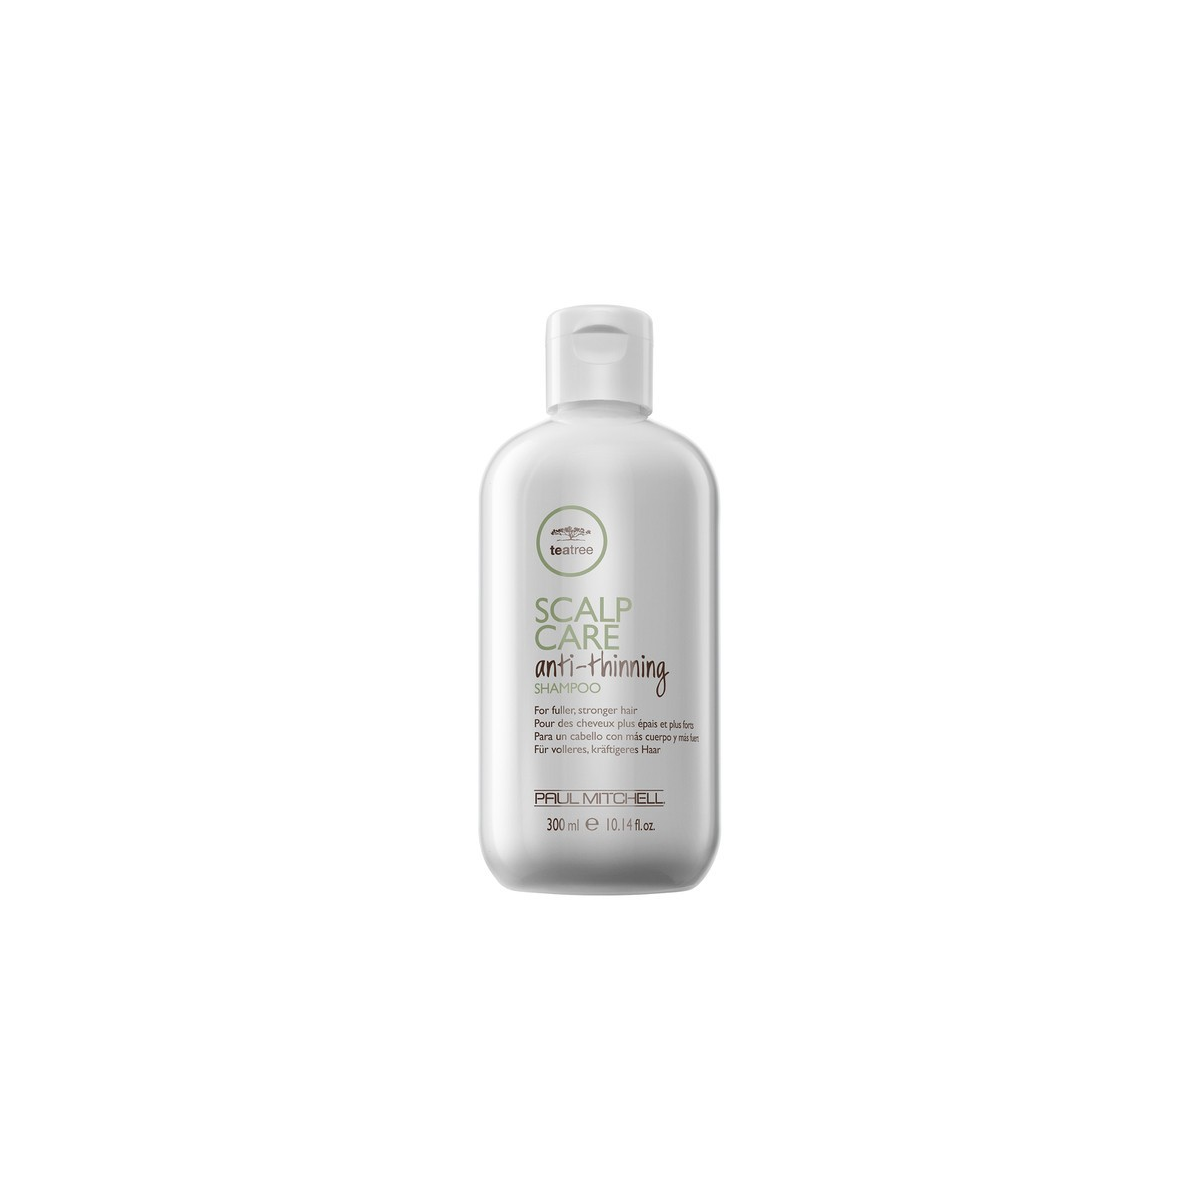 PAUL MITCHELL - TEATREE - SCALP CARE ANTI-THINNING SHAMPOO (300ml) Shampoo